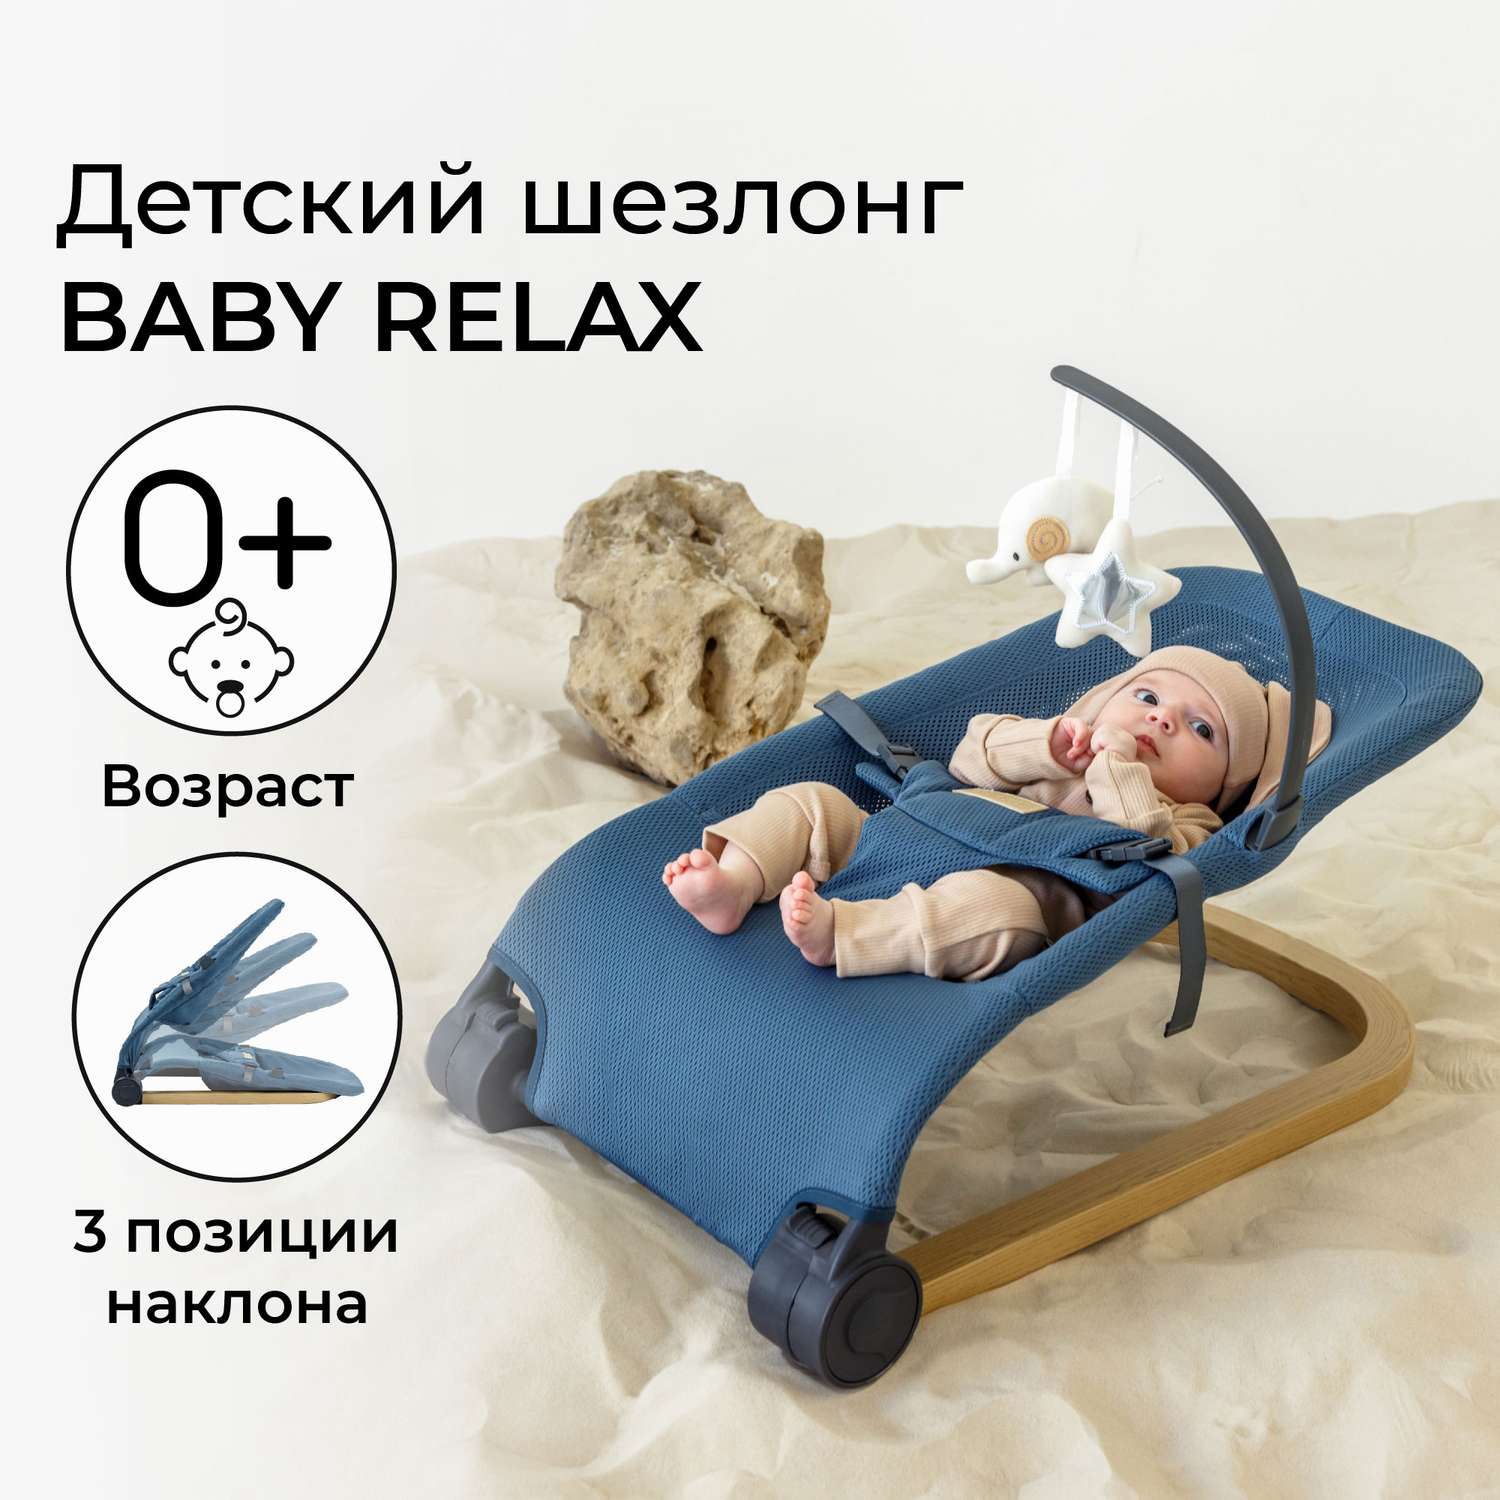 Детский шезлонг AmaroBaby Baby relax синий - фото 1